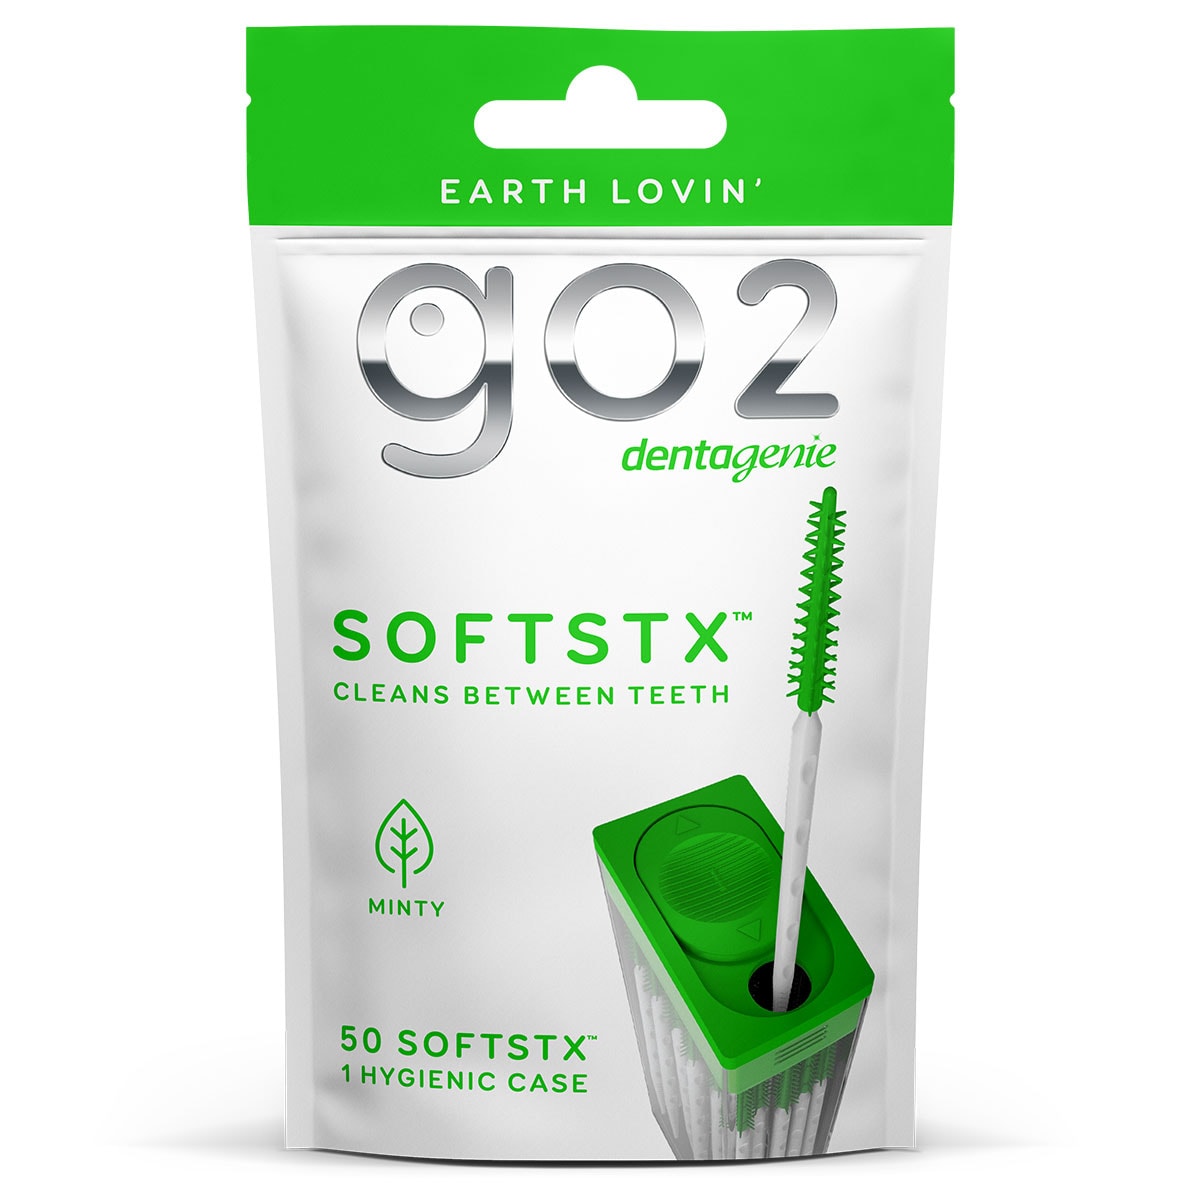 GO2 Dentagenie Softstx Minty 50 Pack